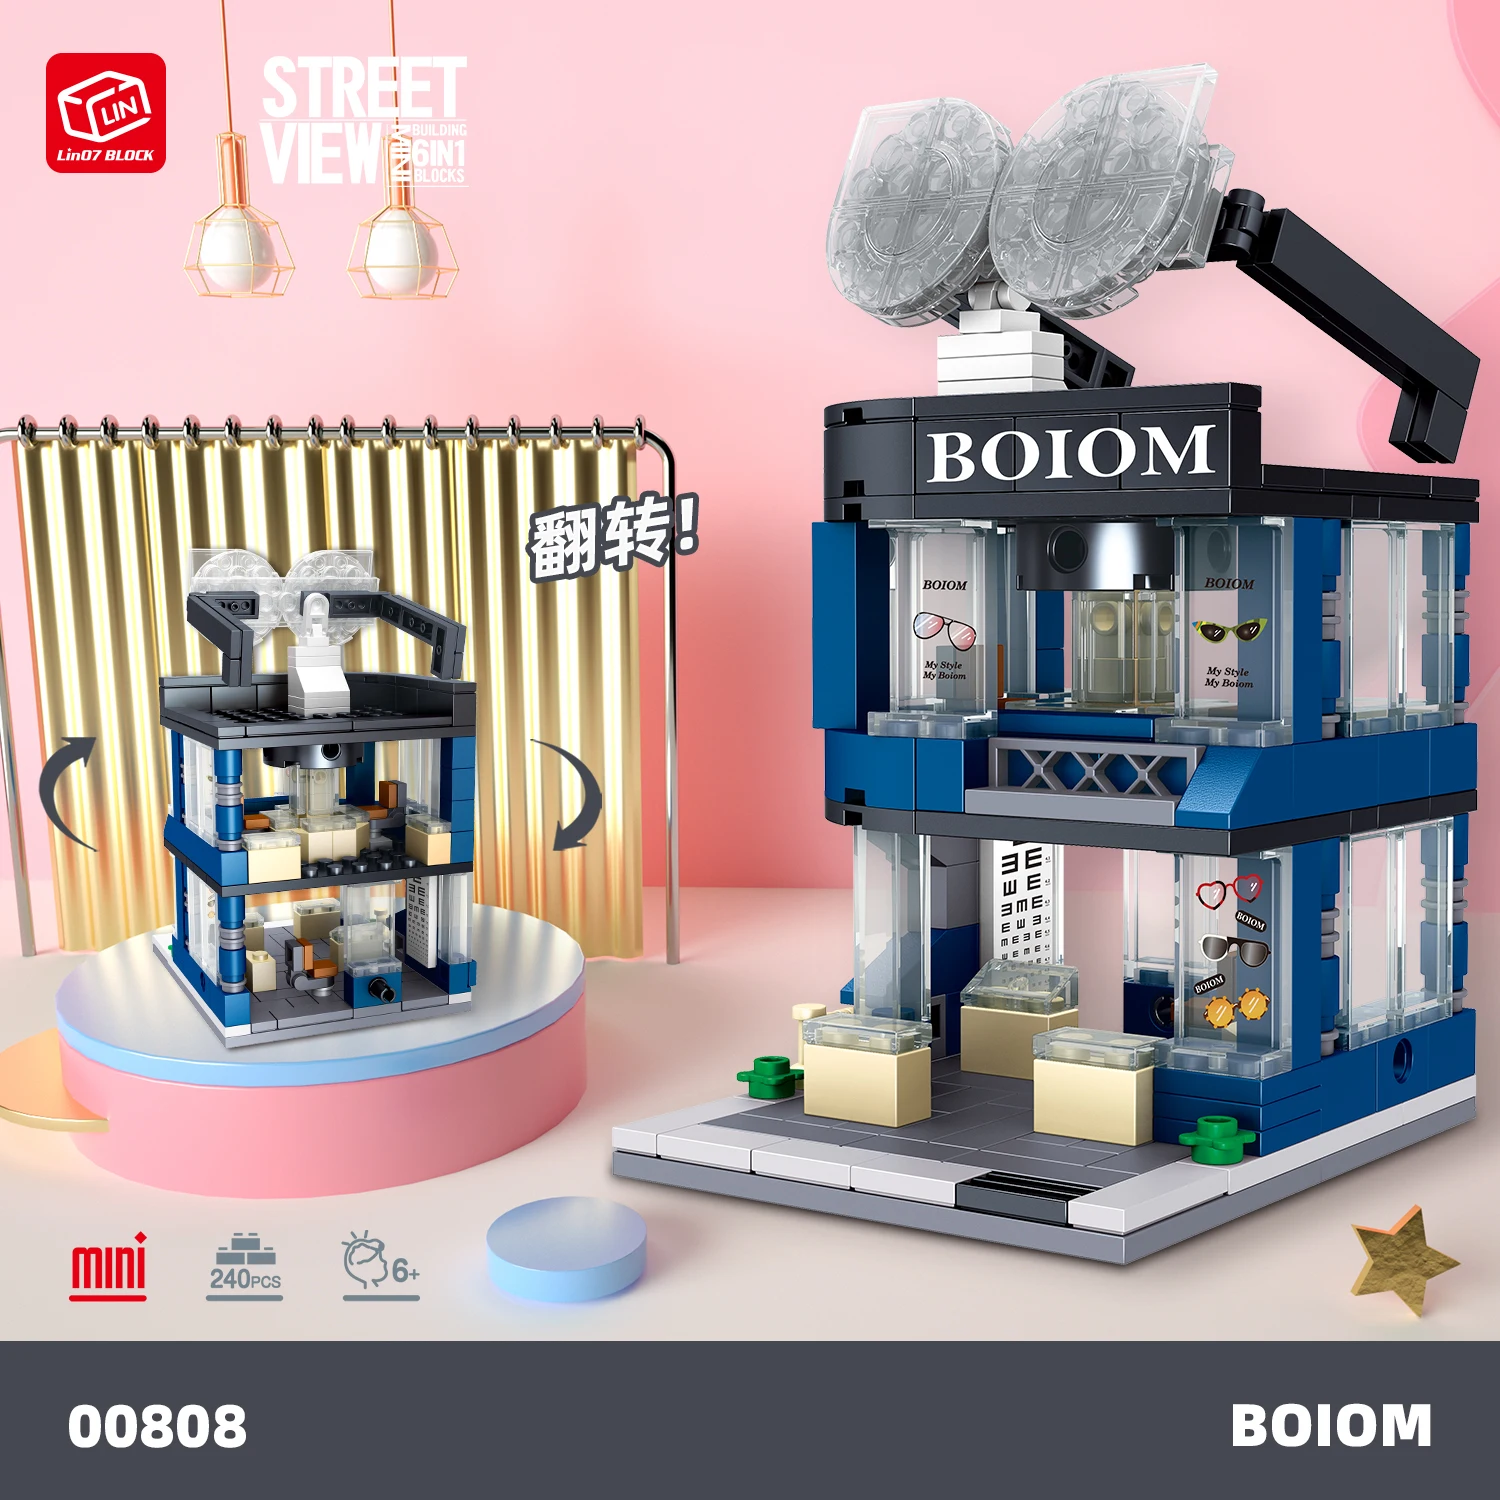 

Boiom Mini Corner Blocks Building Kit Street-View Bricks Toy for Adults and Kids (670 PCS)